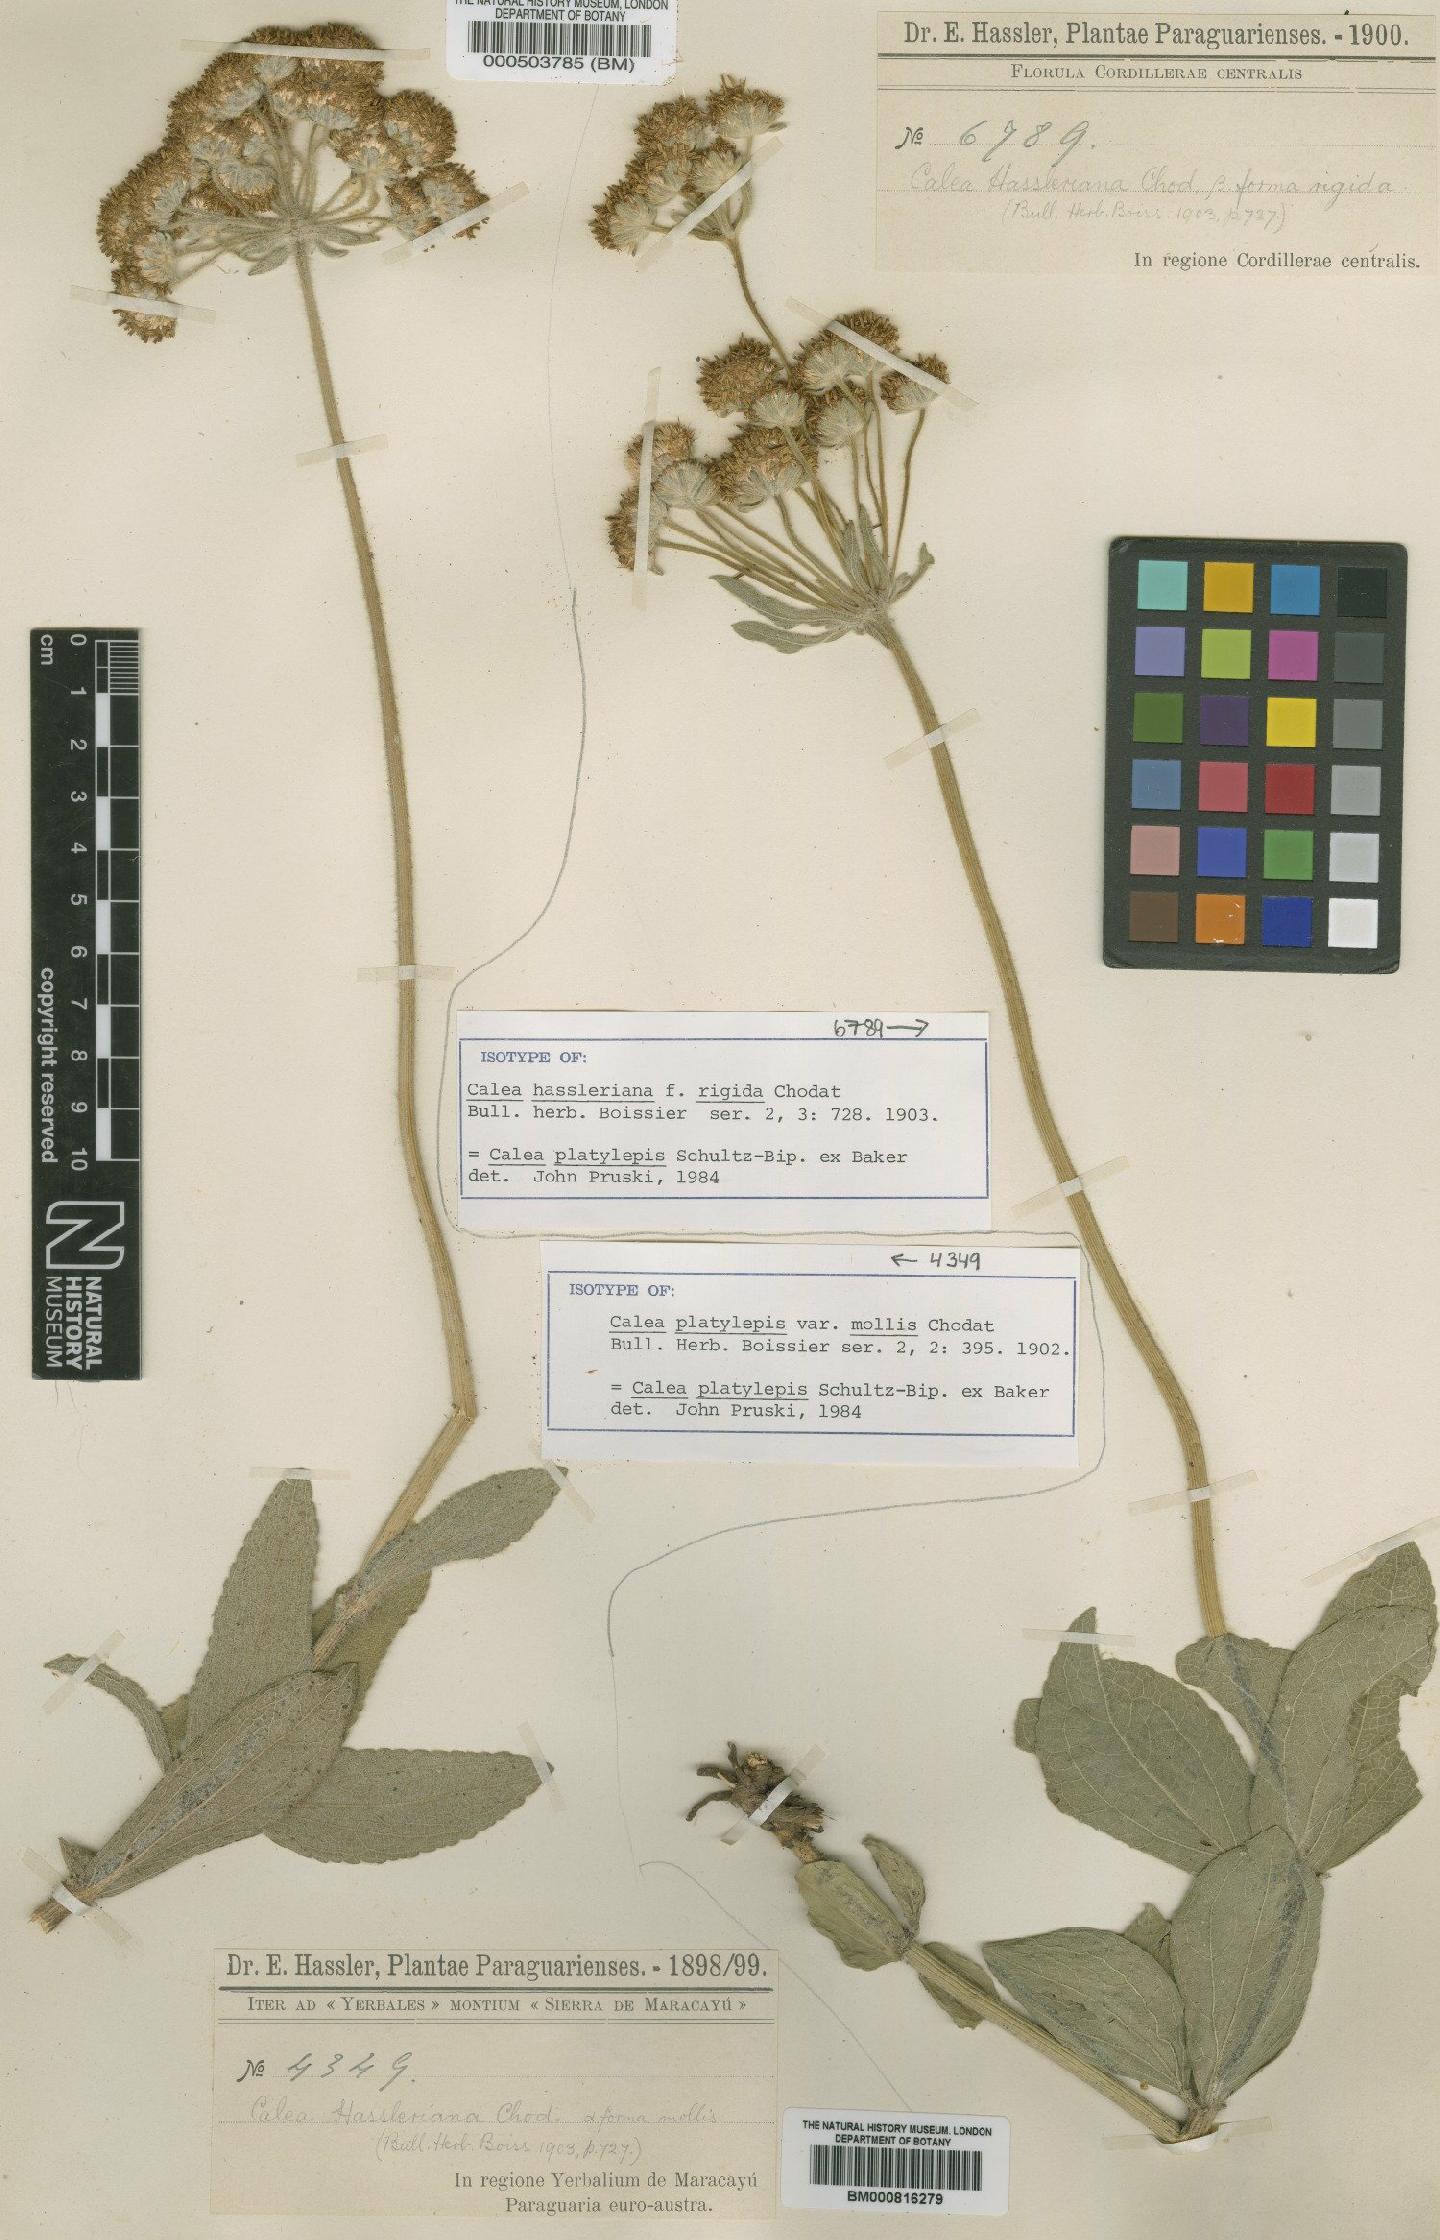 To NHMUK collection (Calea hassleriana f. rigida Chodat; Isotype; NHMUK:ecatalogue:4566695)